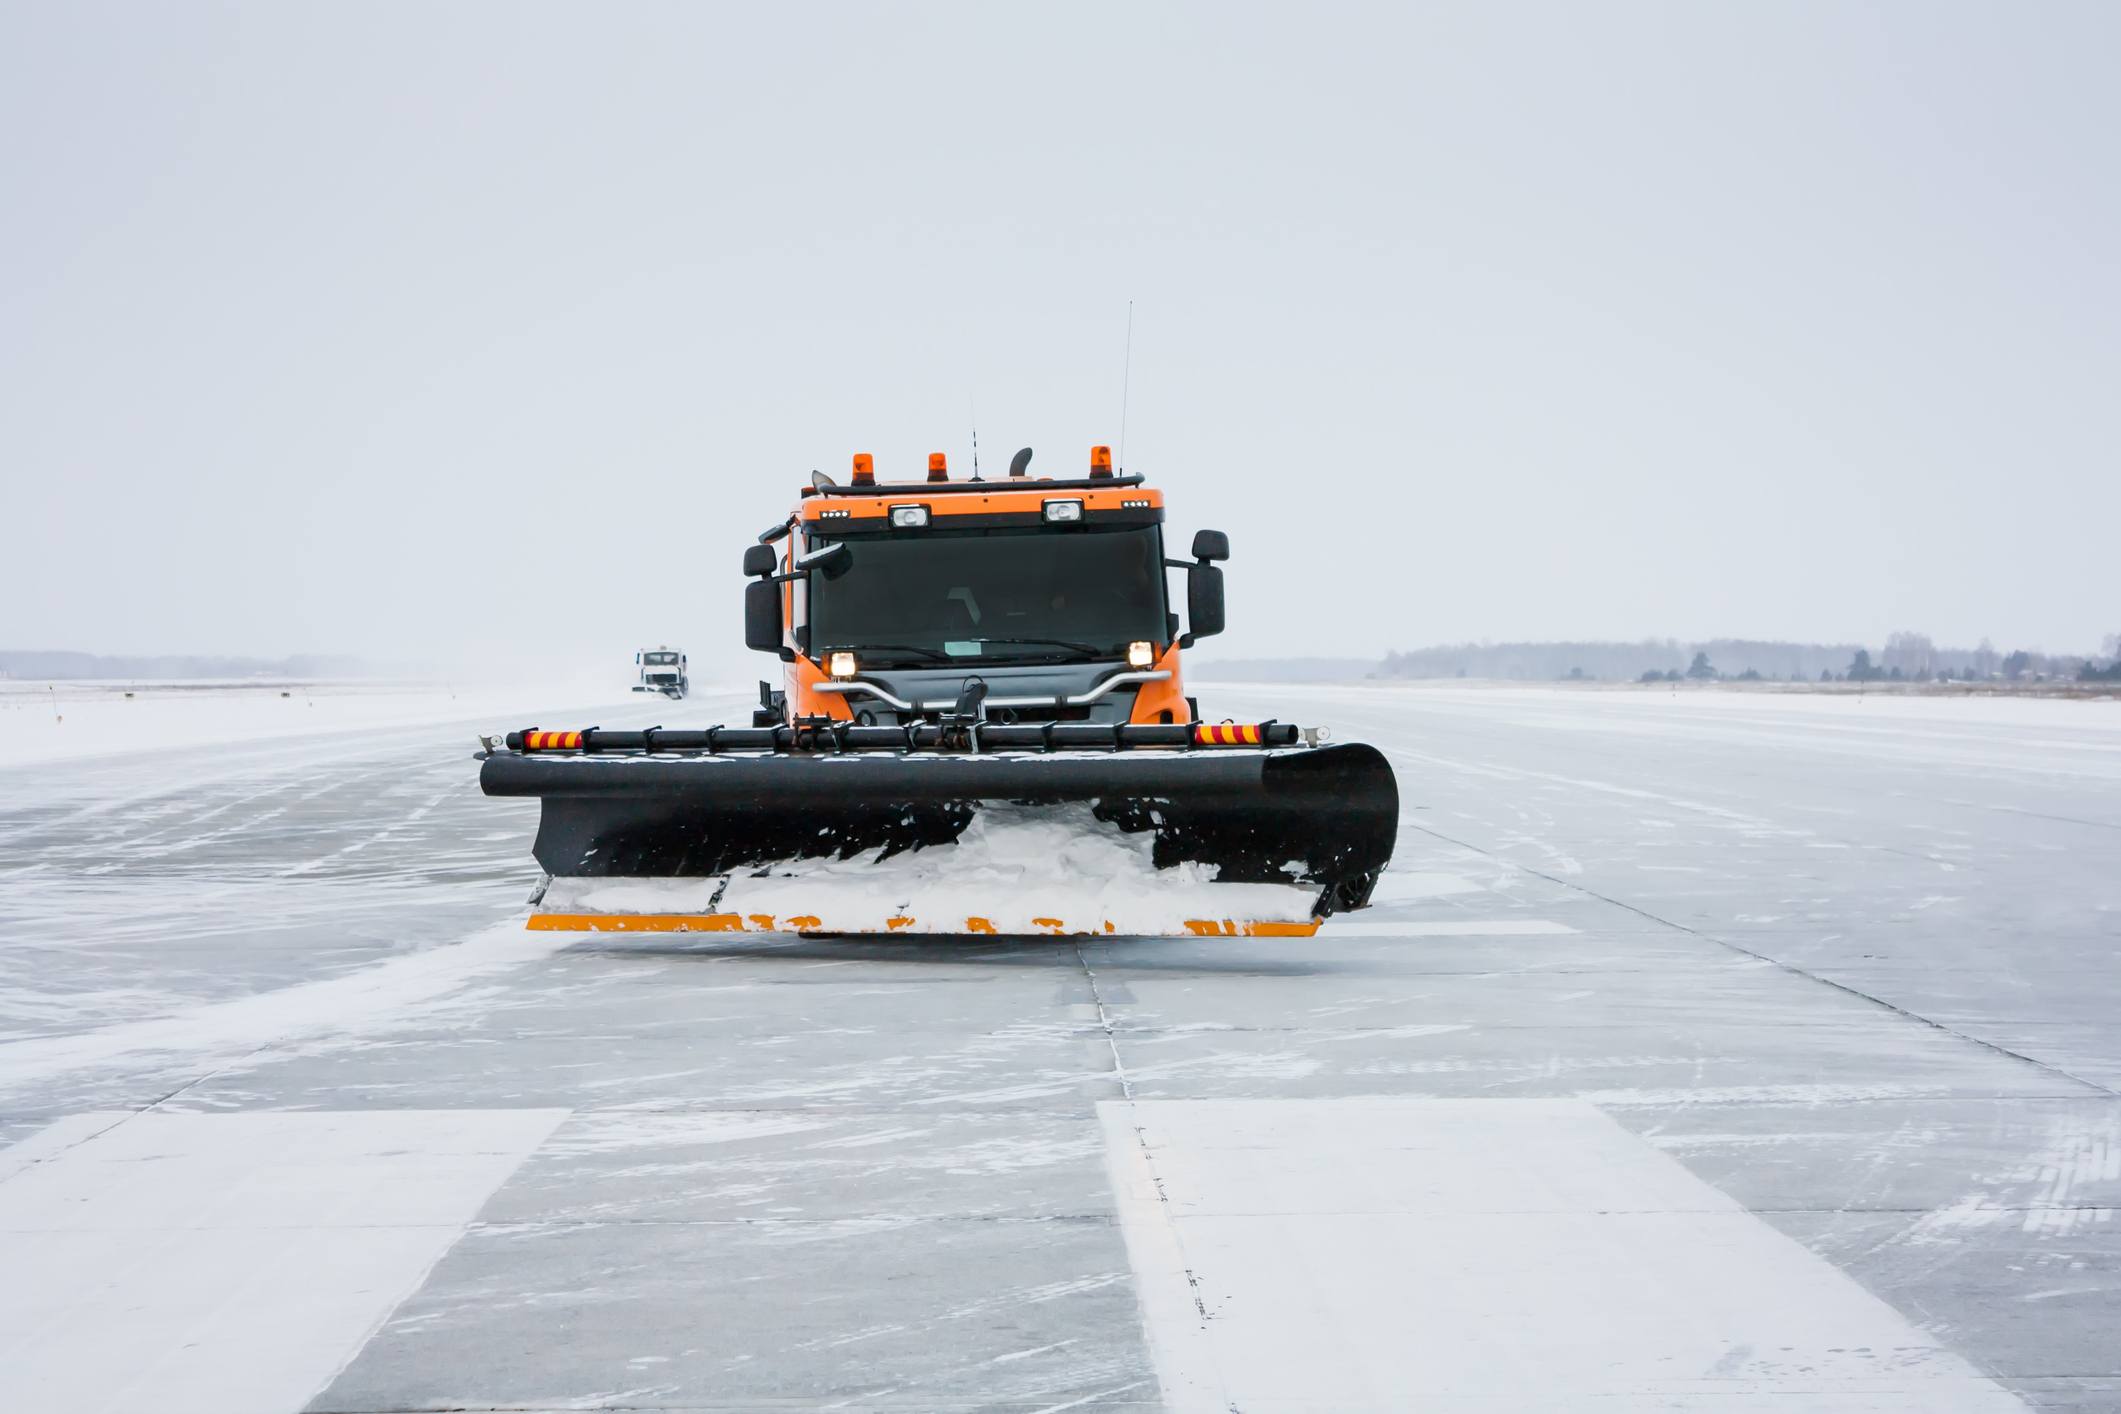 Snow machines on the winter runway